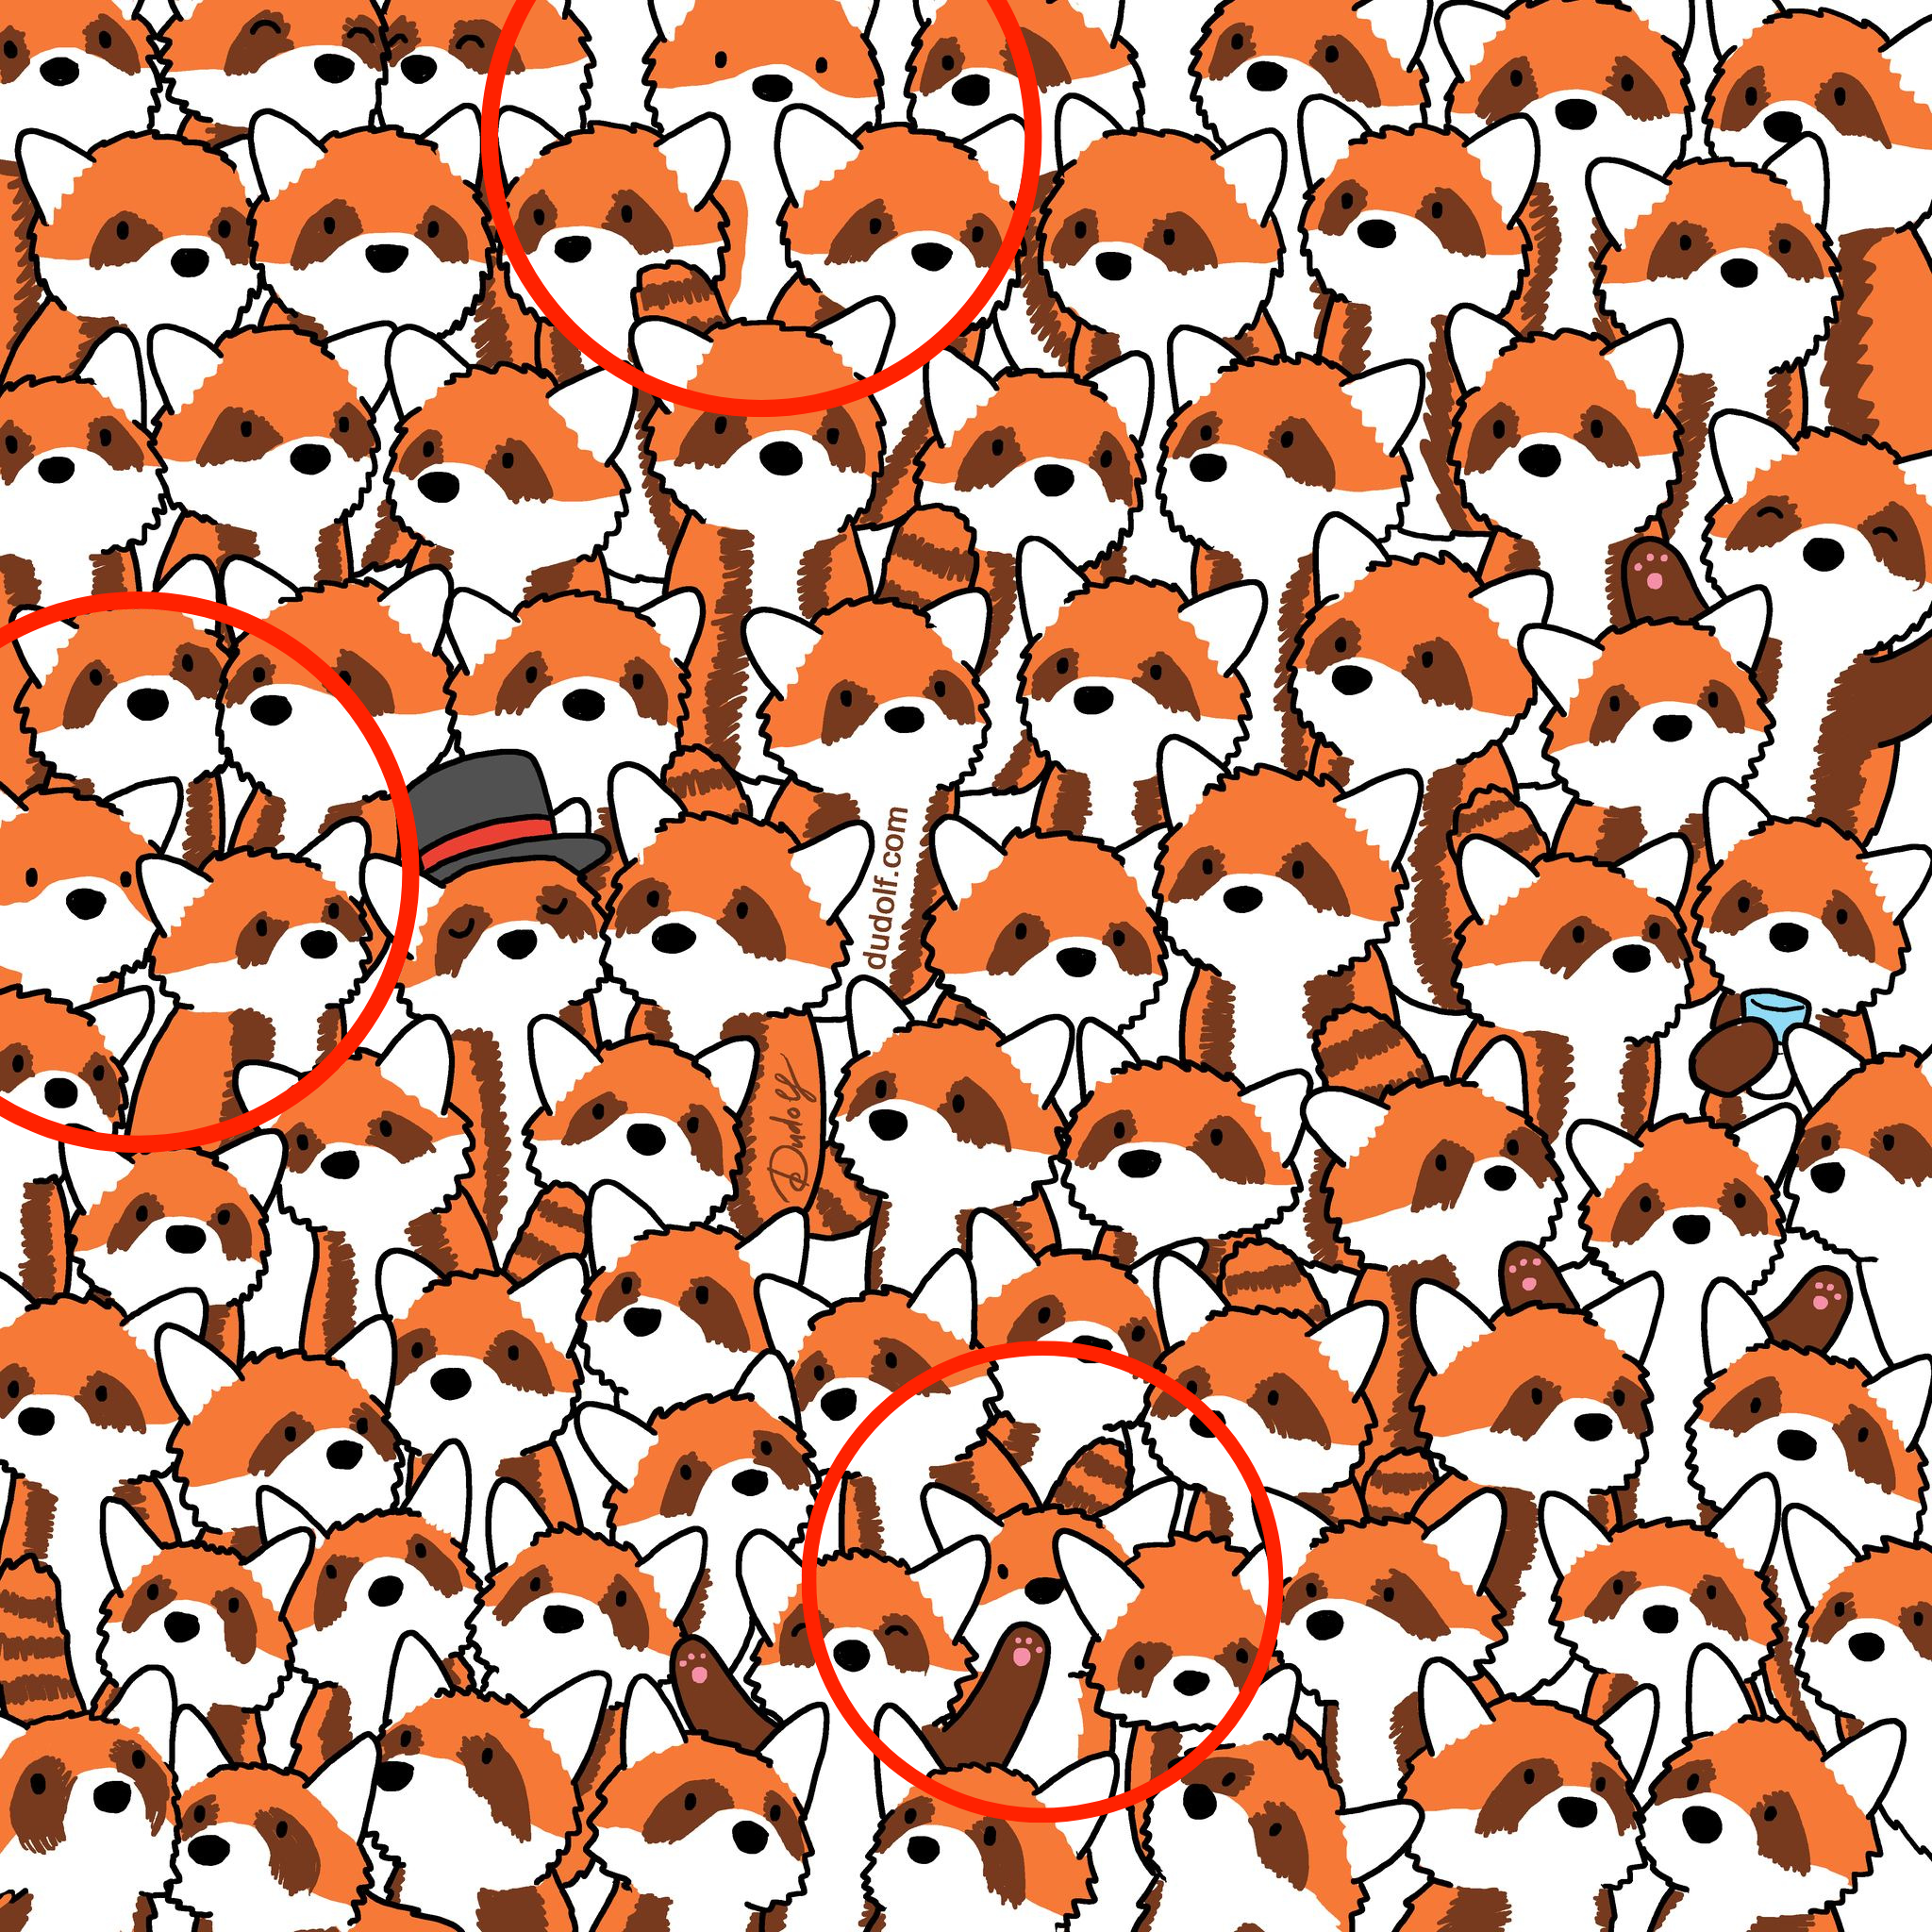 Optical Illusion Spot 3 Hidden Foxes Among The Red Pandas